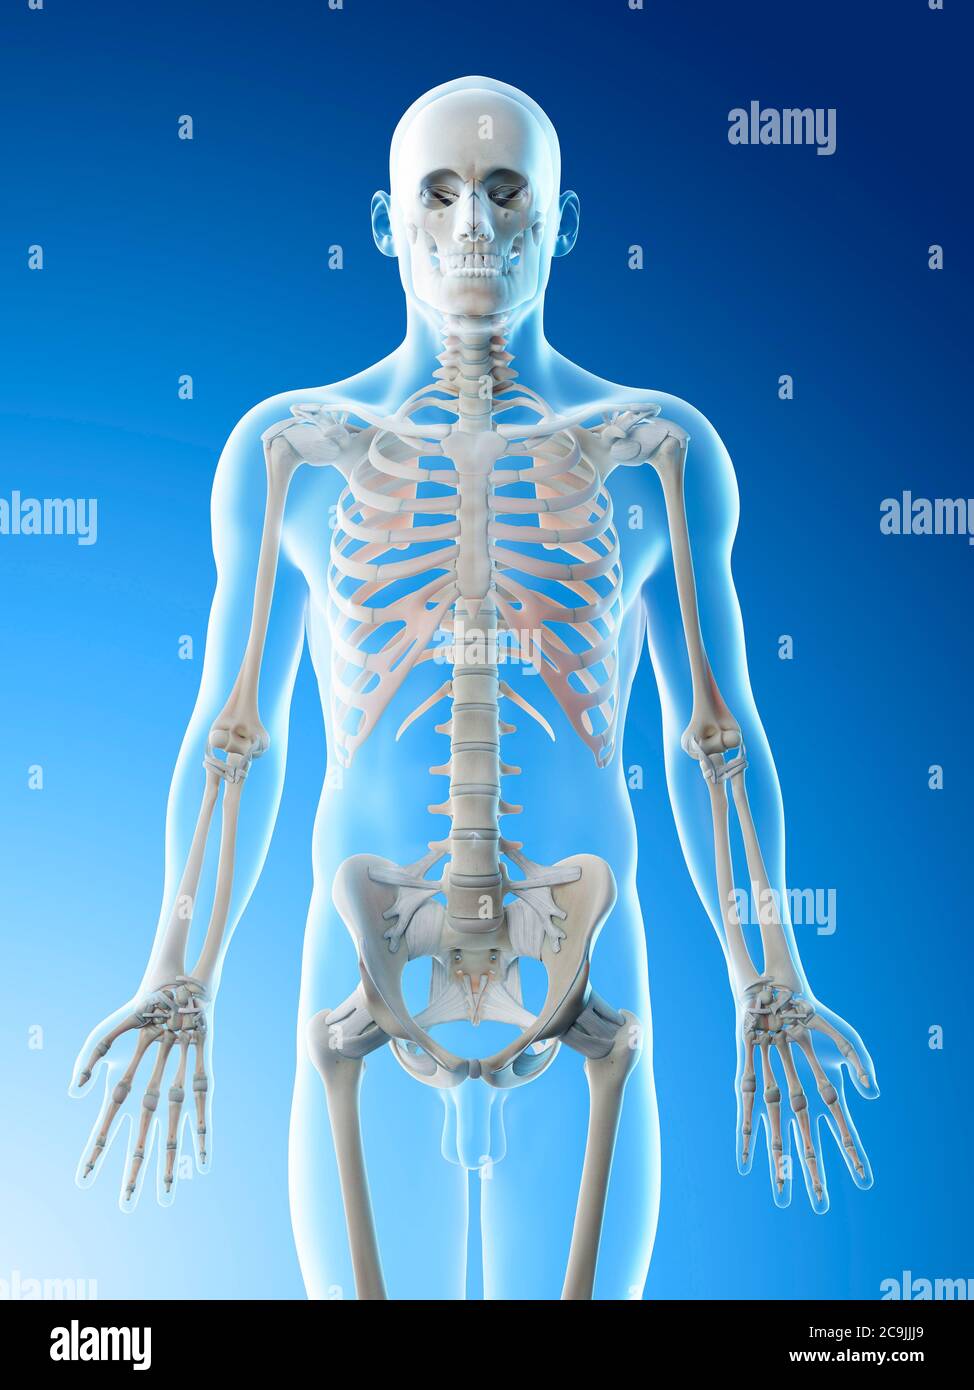 Upper body bones, computer illustration Stock Photo - Alamy